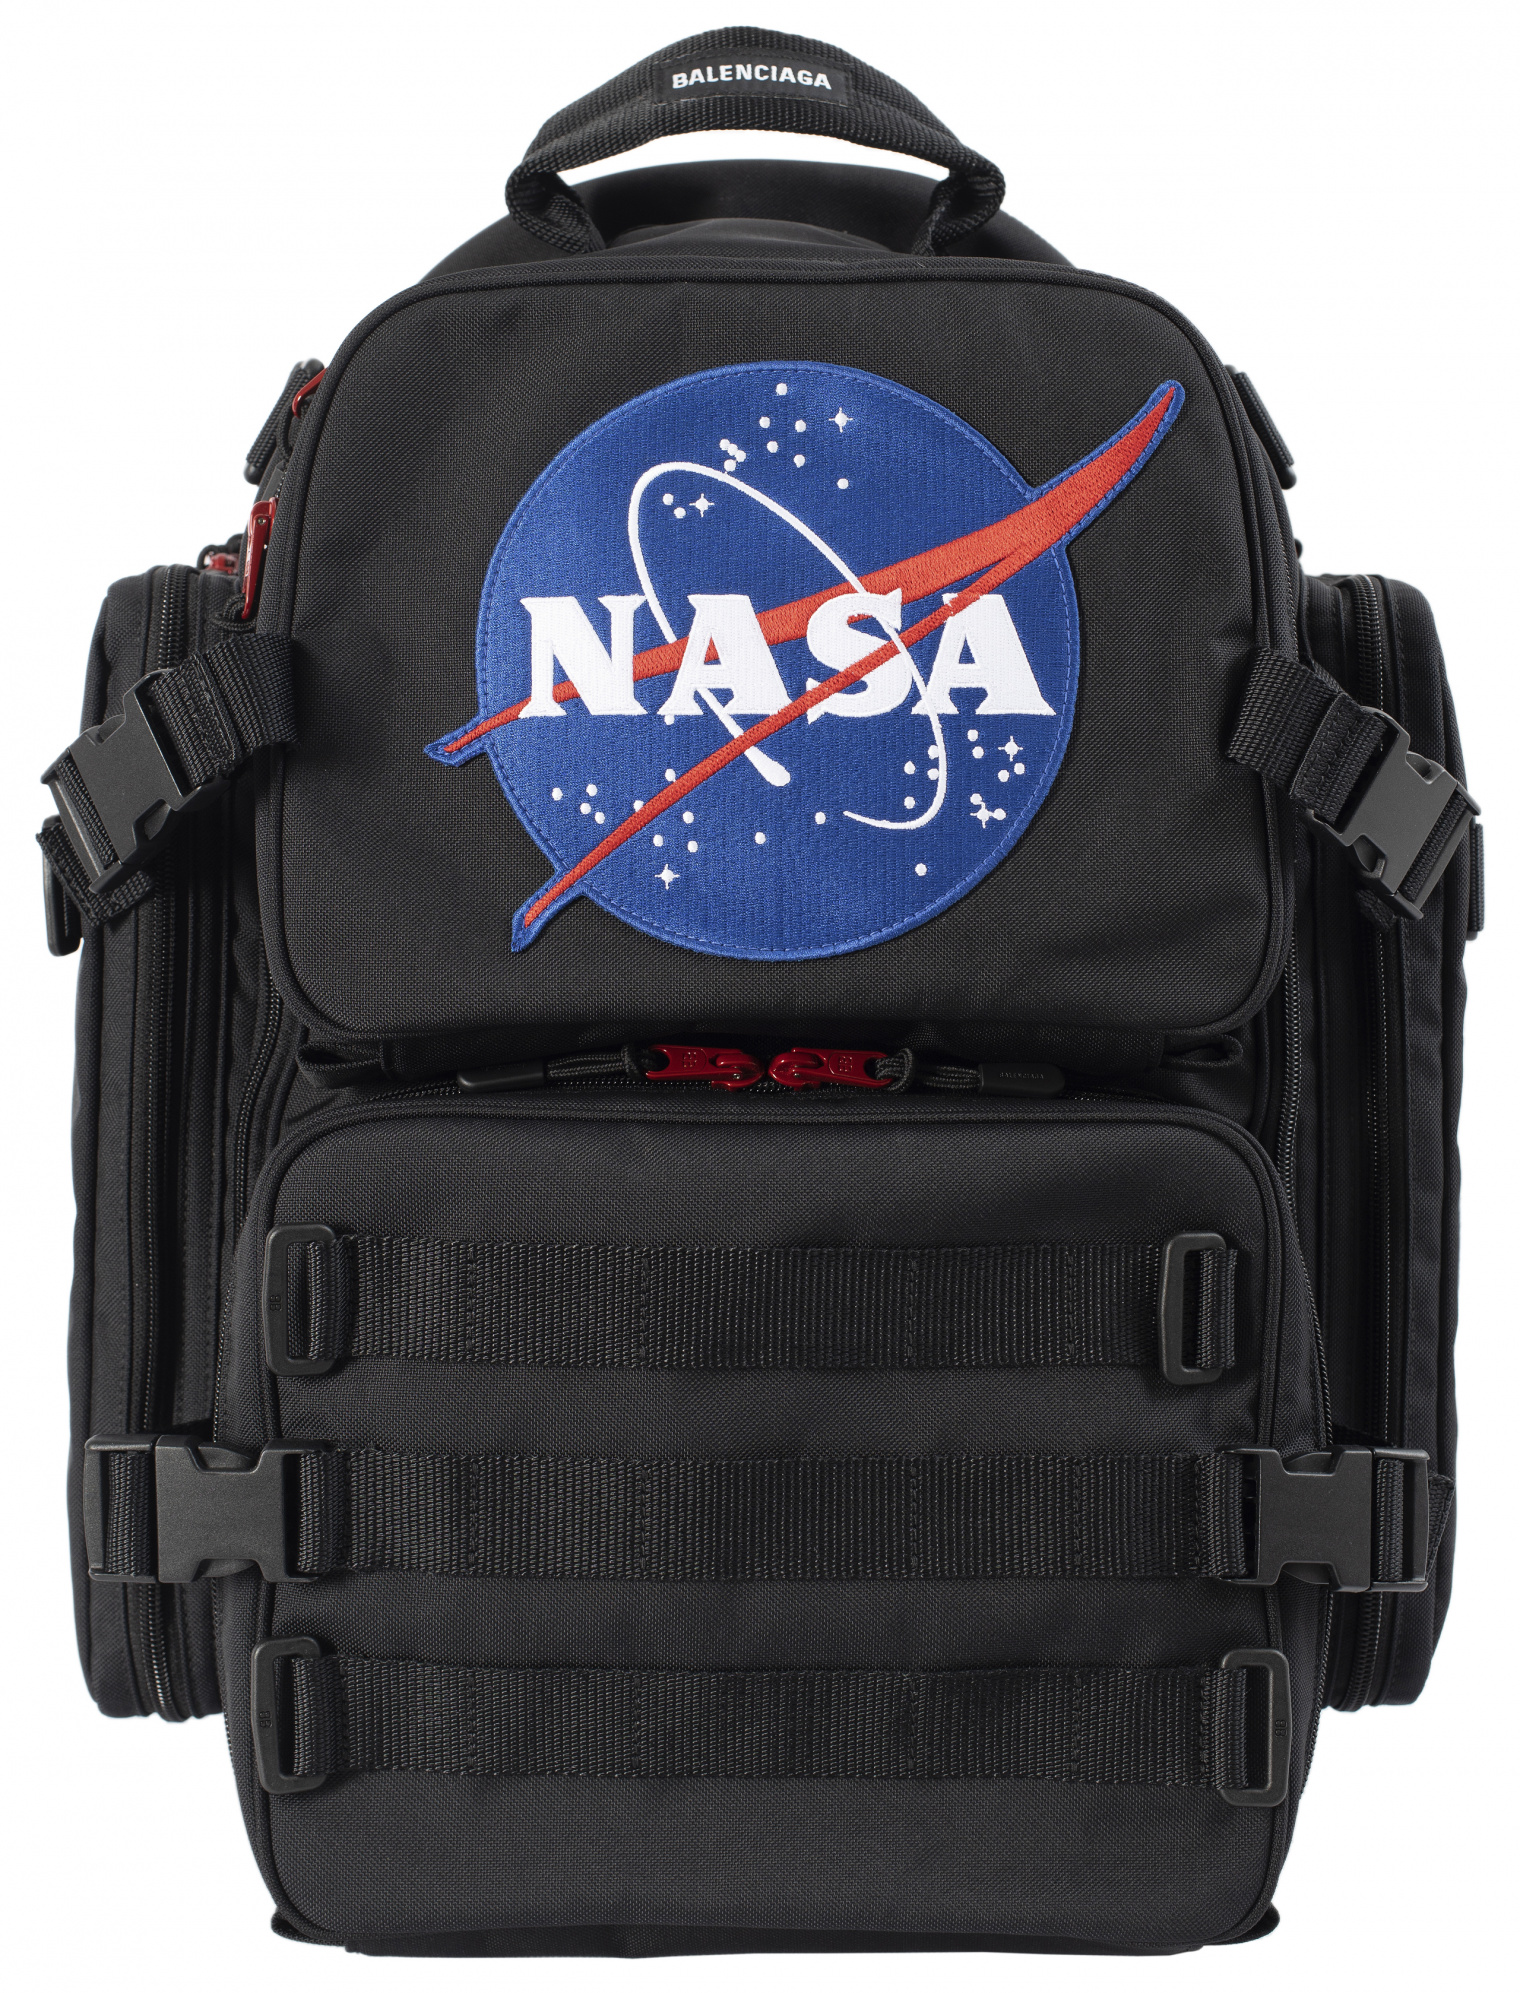 Balenciaga Black Space Backpack in embroidered NASA